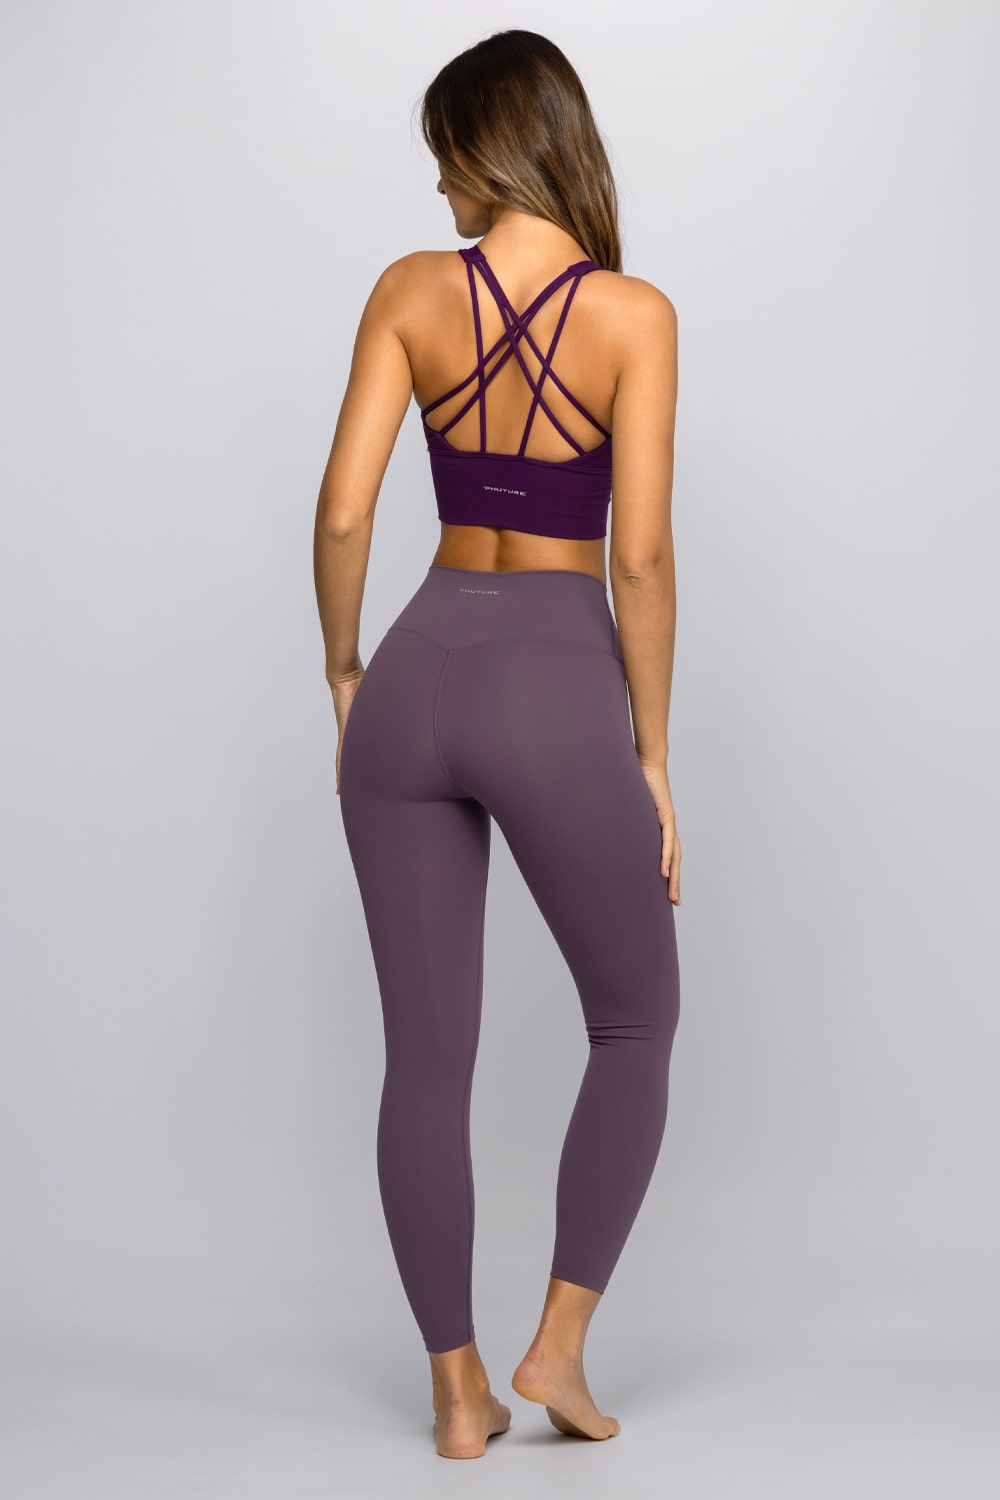 Luxana Sports Bra - Deep Lavender